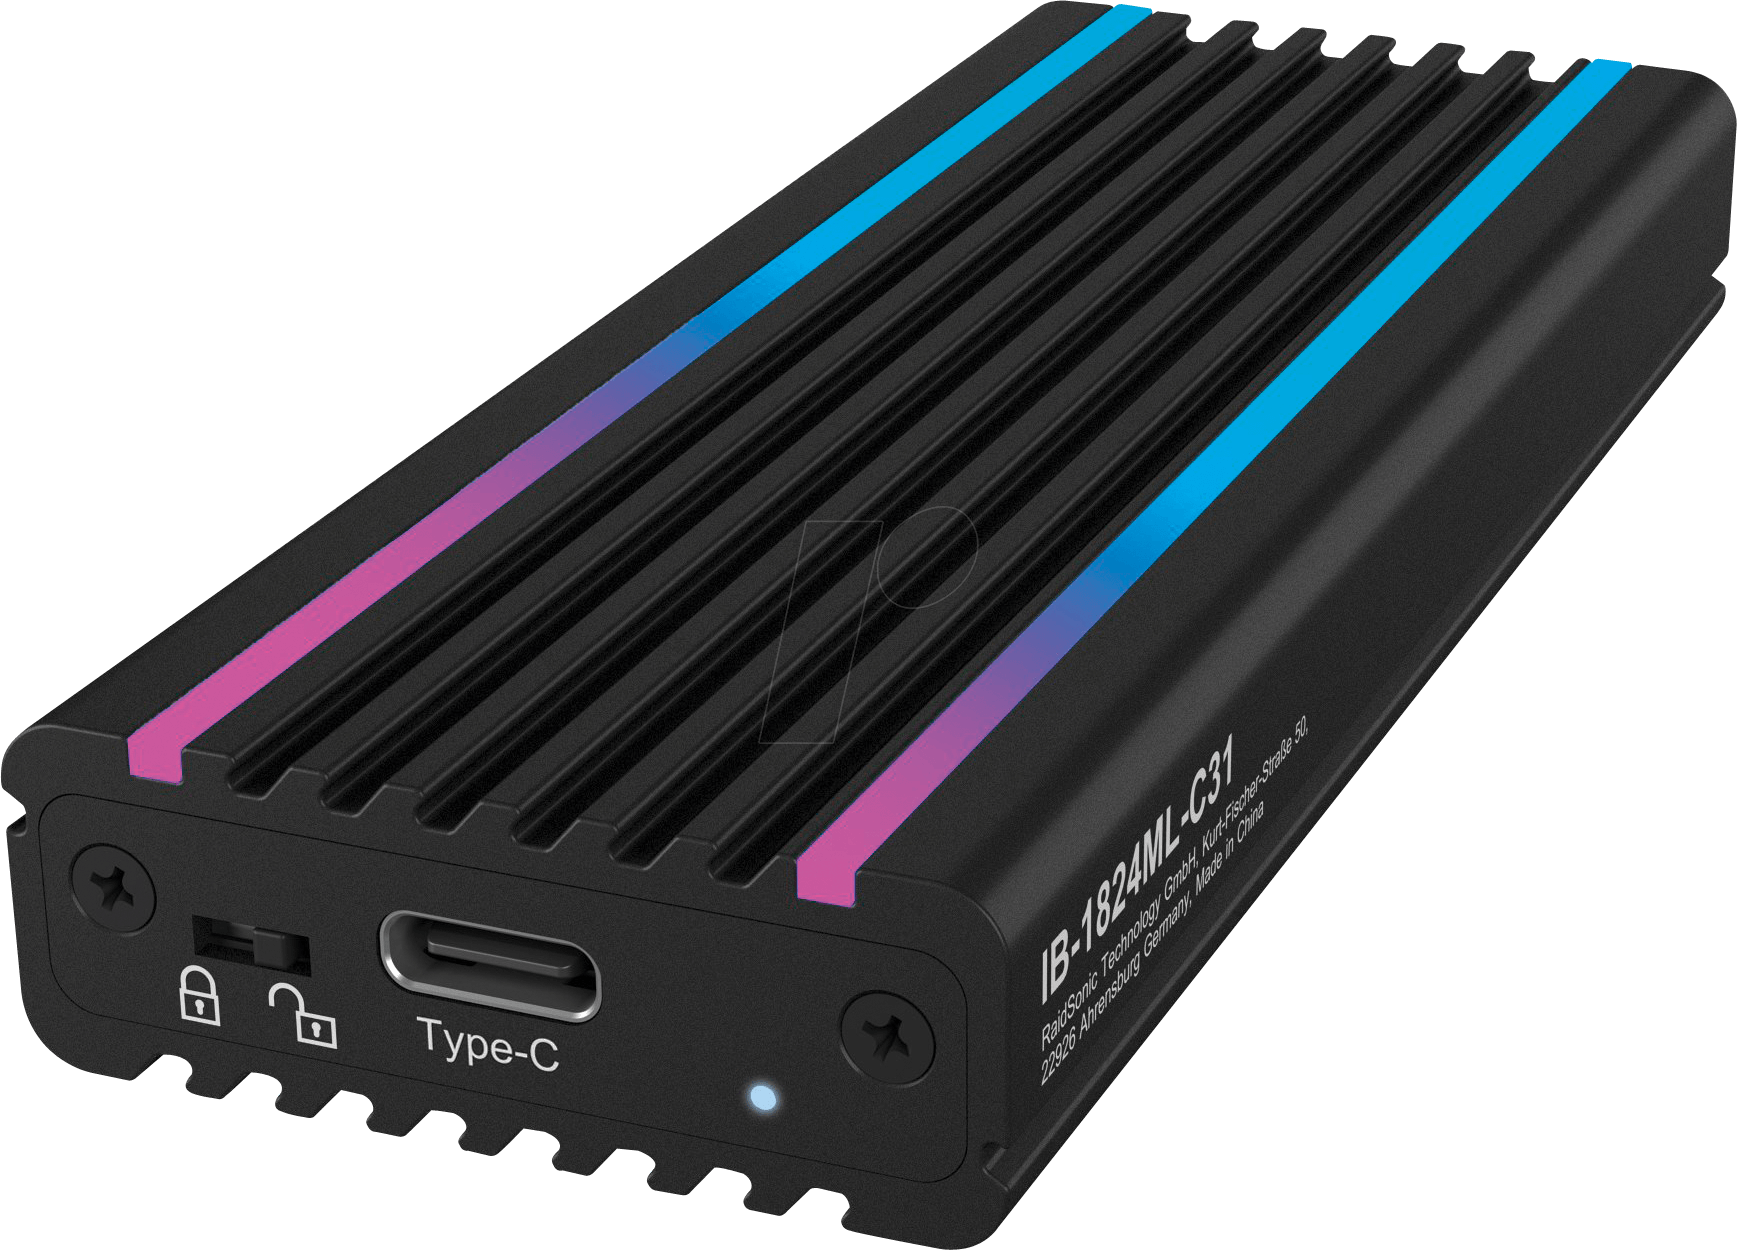 ICY IB-1824MLC31 - Externes M.2 NVMe SSD Gehäuse, USB 3.1 Typ-C - RGB